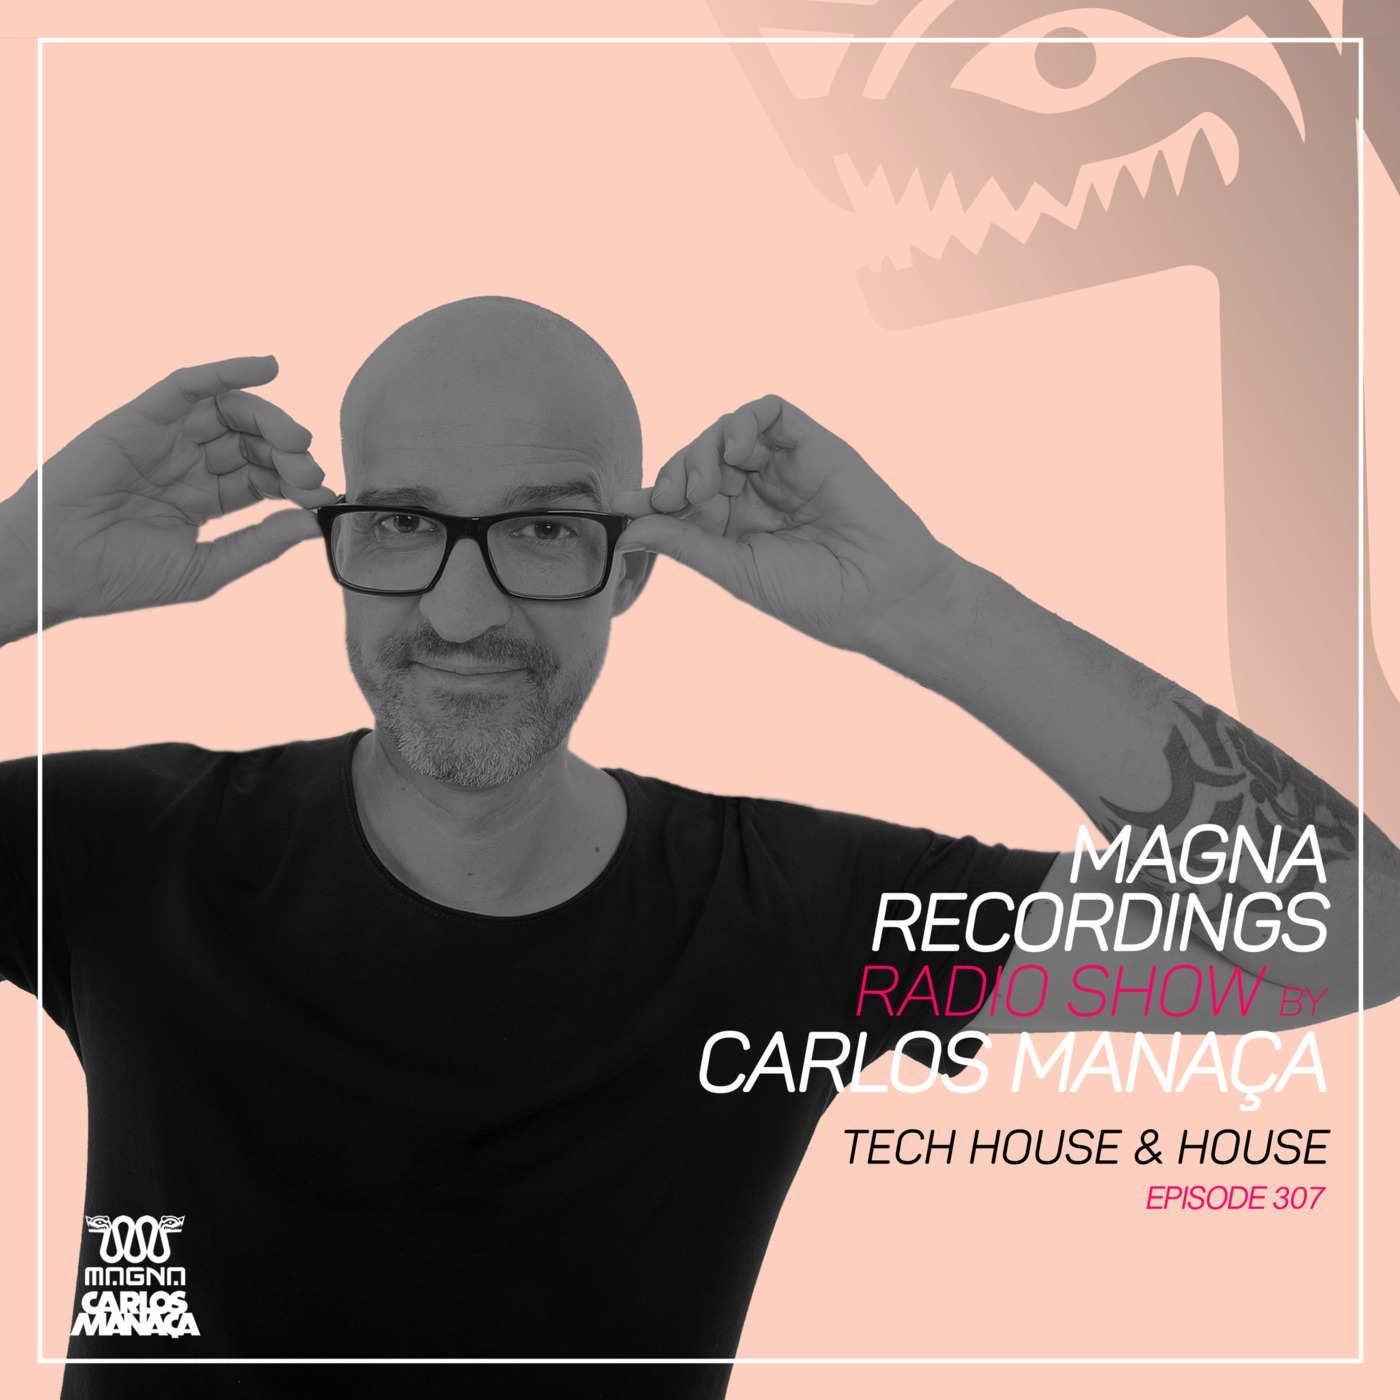 Episode 132: Magna Recordings Radio Show by Carlos Manaça 307 | Tech House & House Music